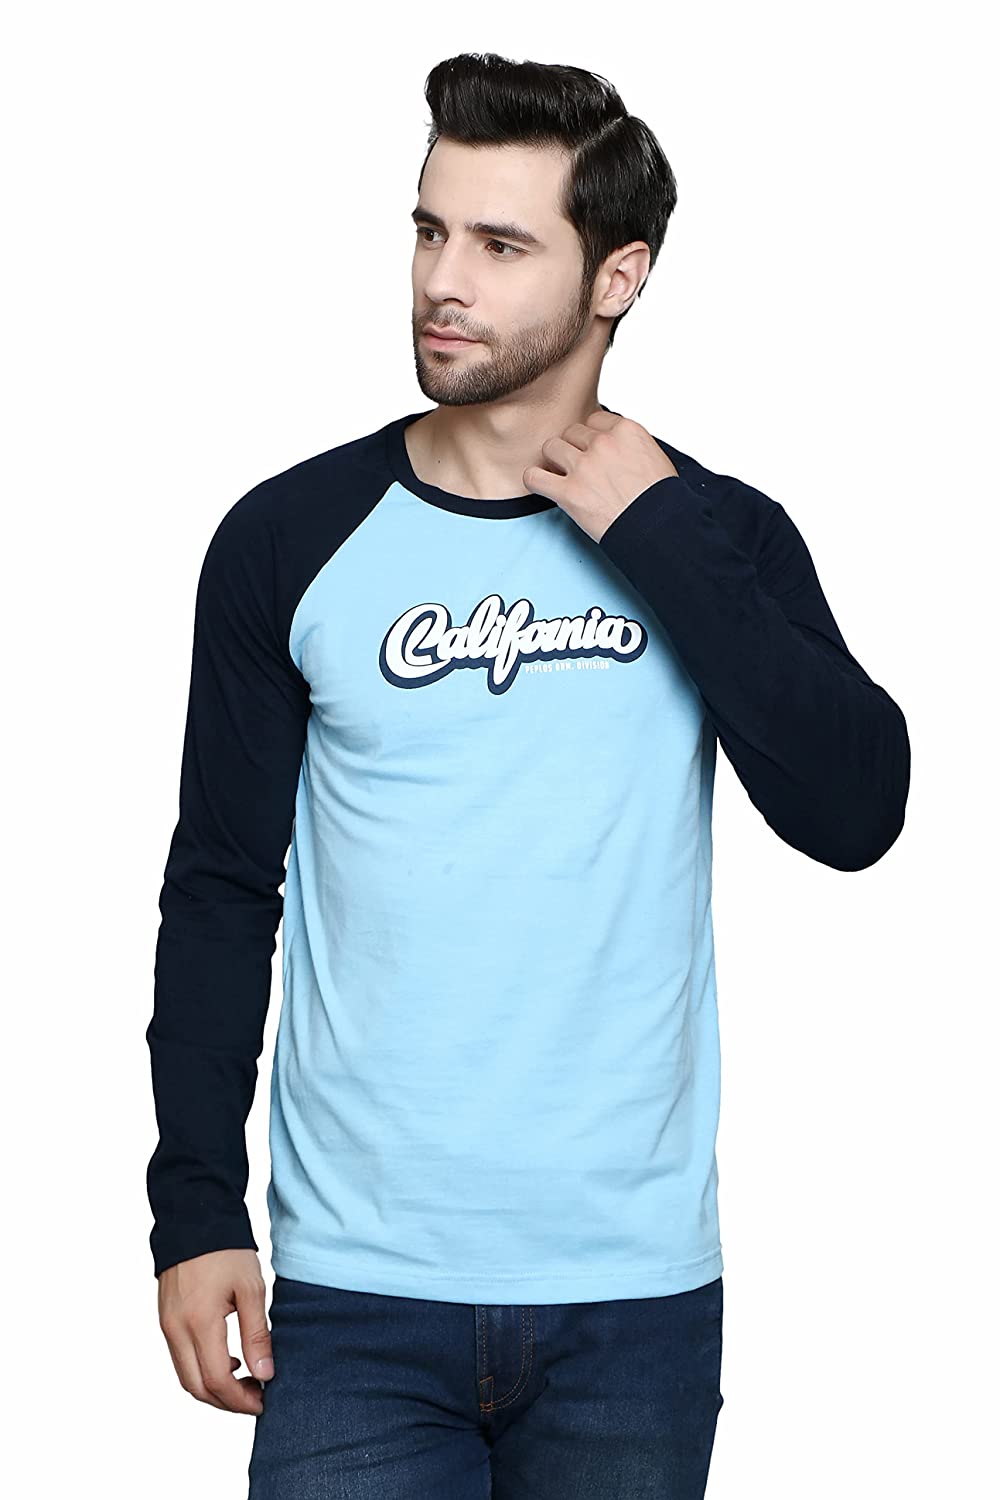 Regular Fit Sky + Navy Blue Color Raglan Full Sleeve Premium Class Cotton T-Shirt for Men